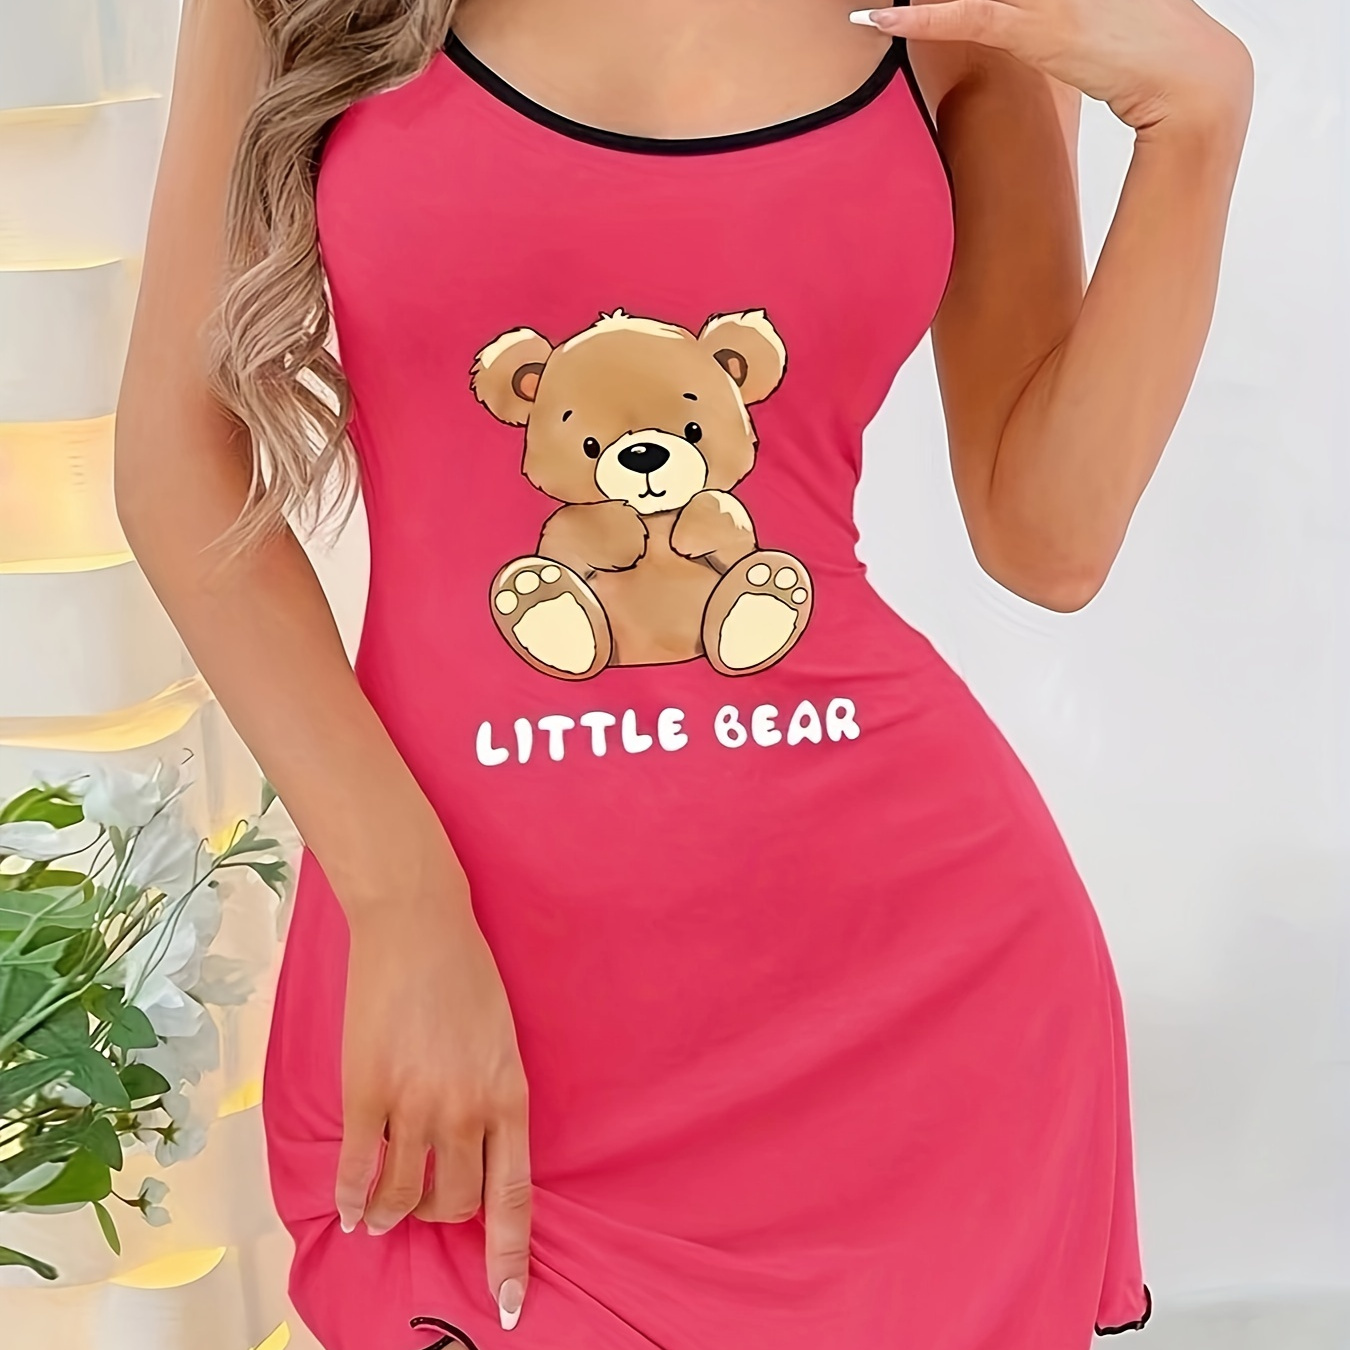 

Cute Bear & Letter Print Nightgown, Round Neck Backless Frill Trim Slip Dress, Women's Sleepwear